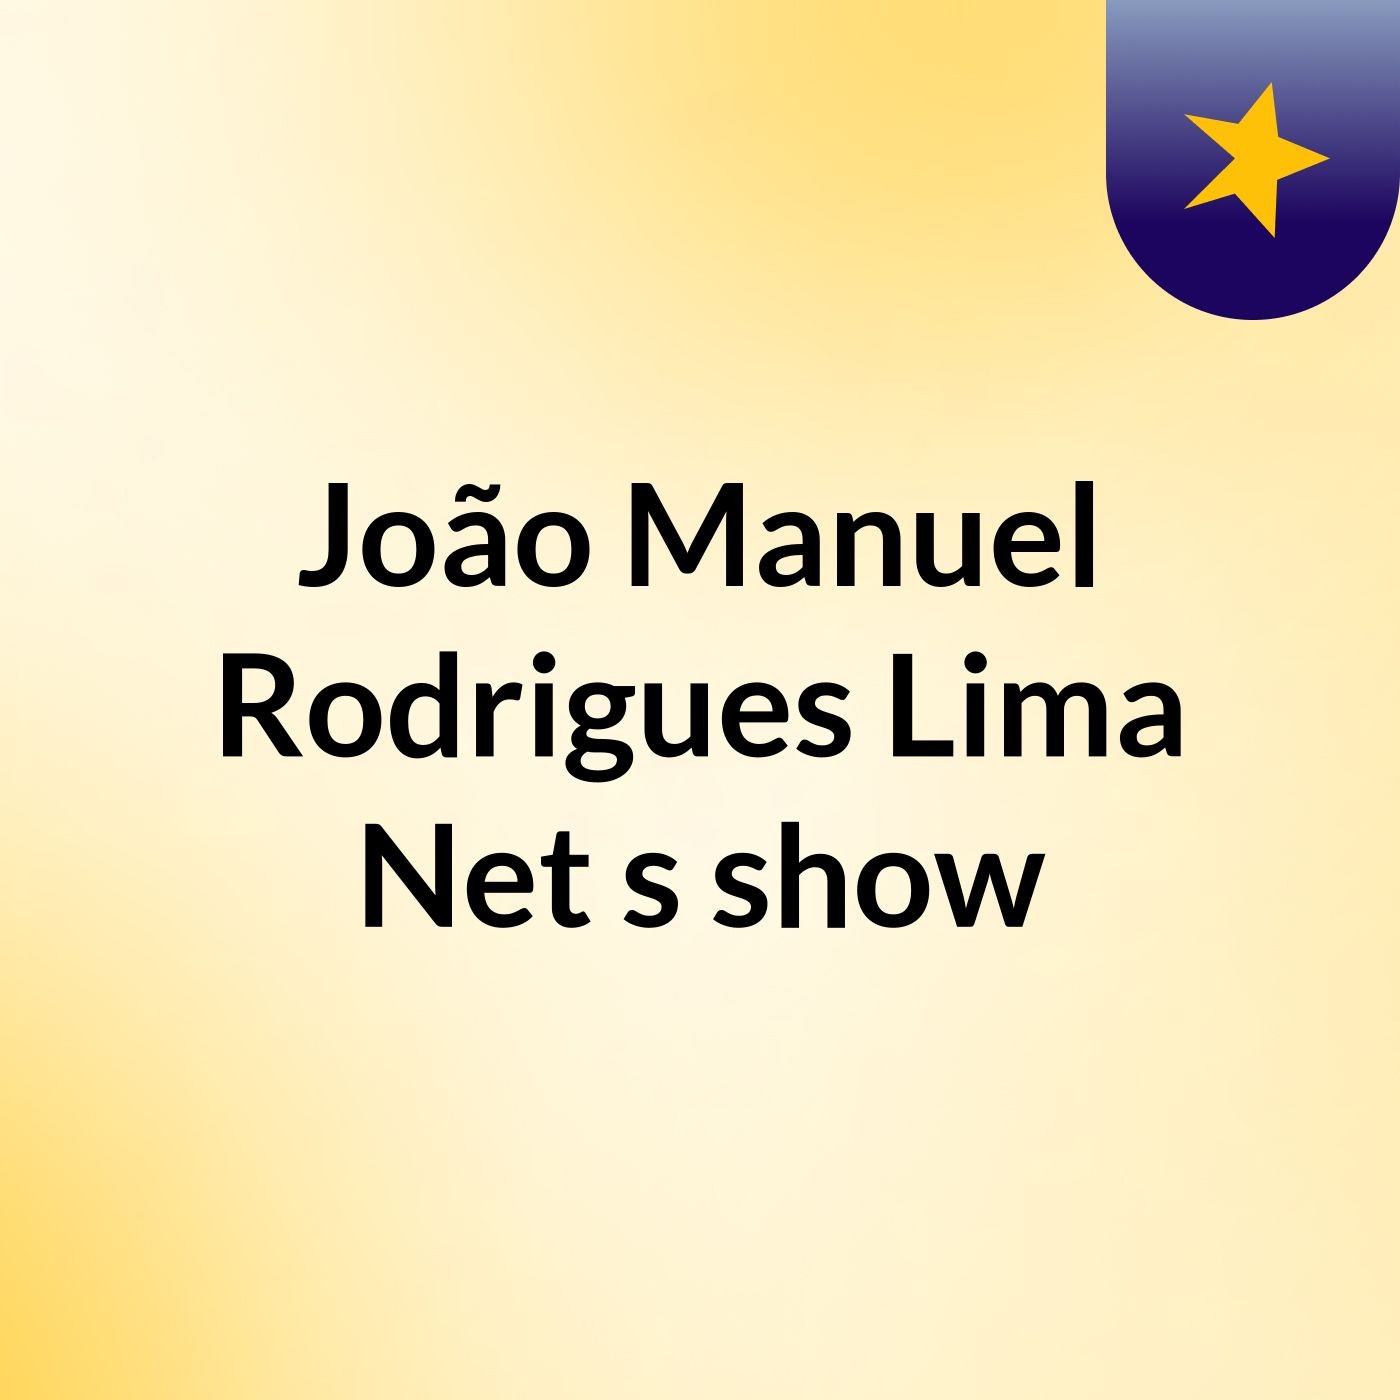 João Manuel Rodrigues Lima Net's show